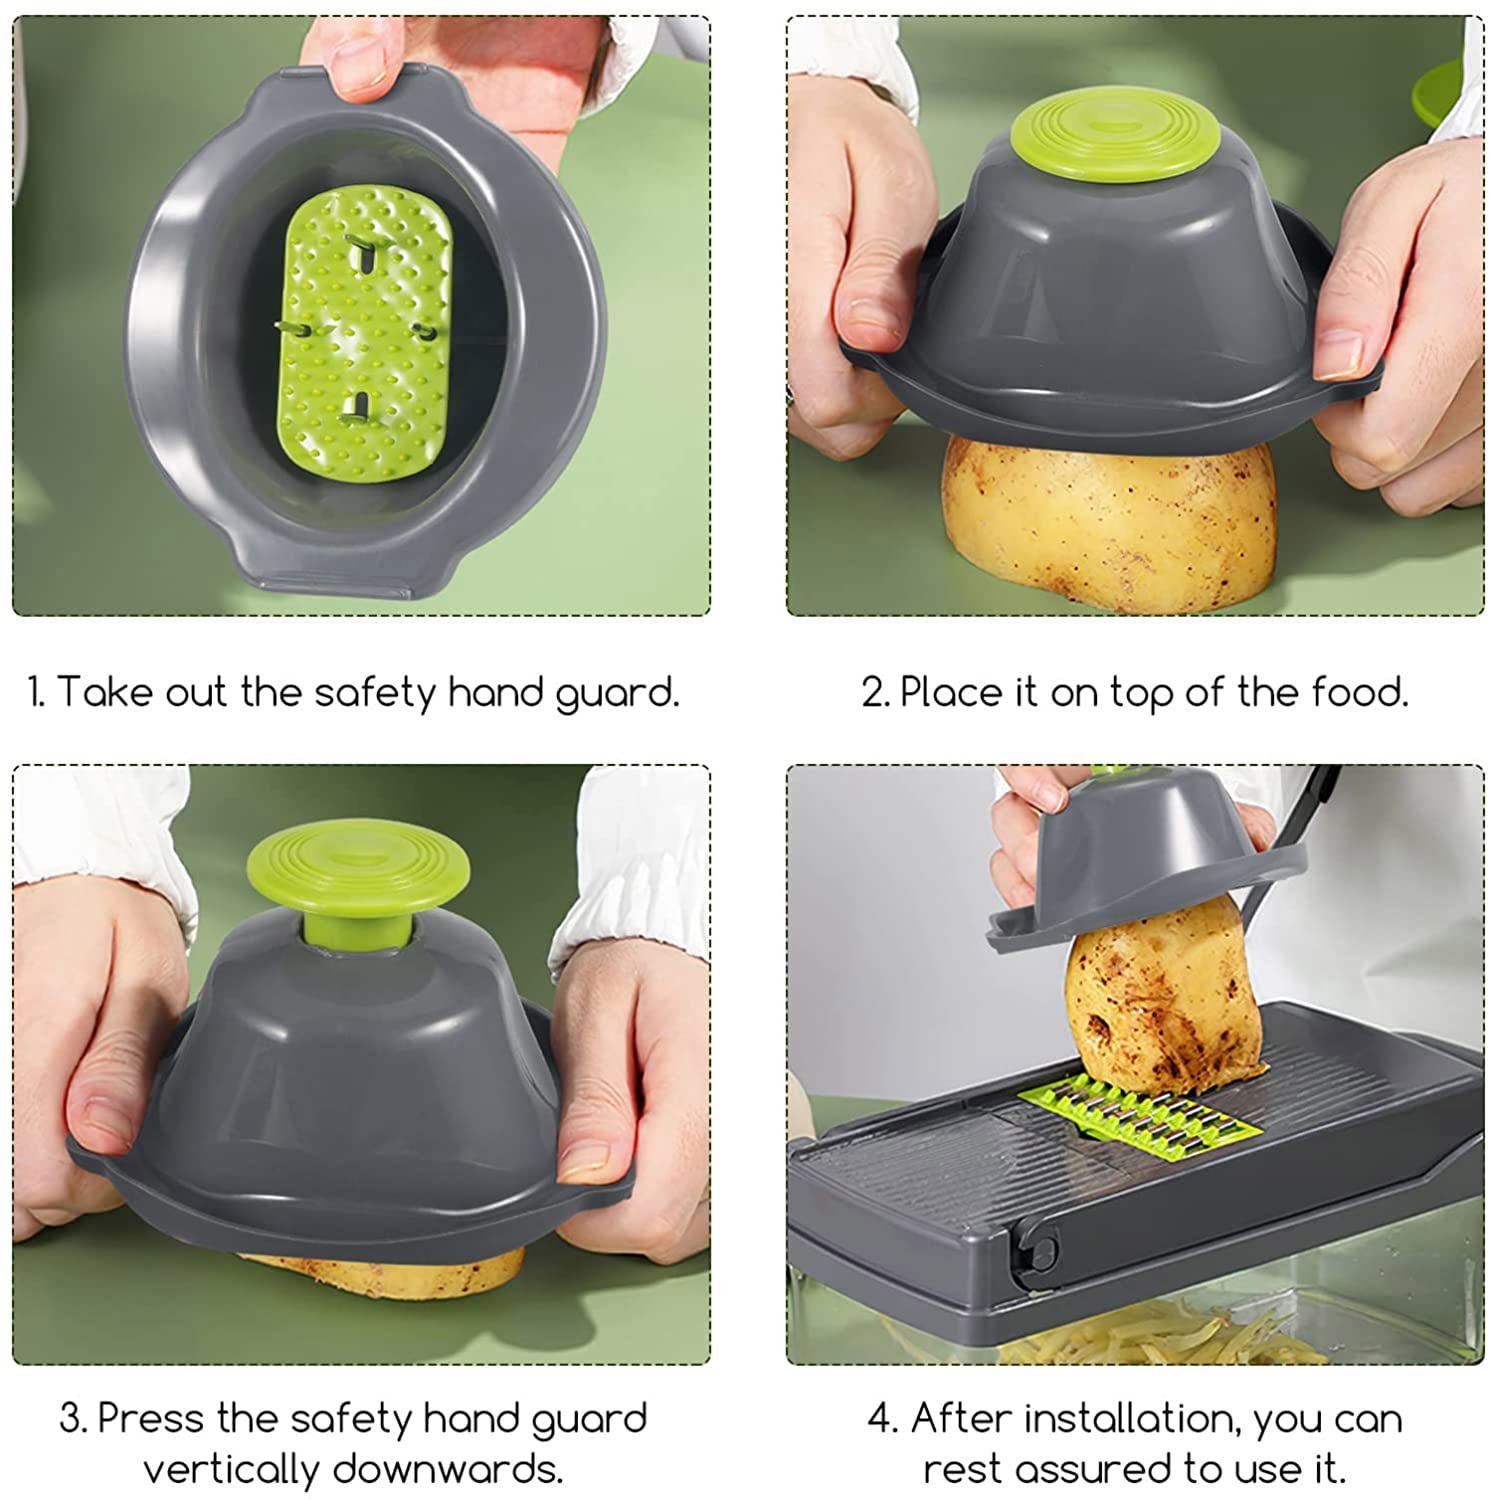 Onion Chopper Manual Hand Press Garlic Vegetable Food Cutter